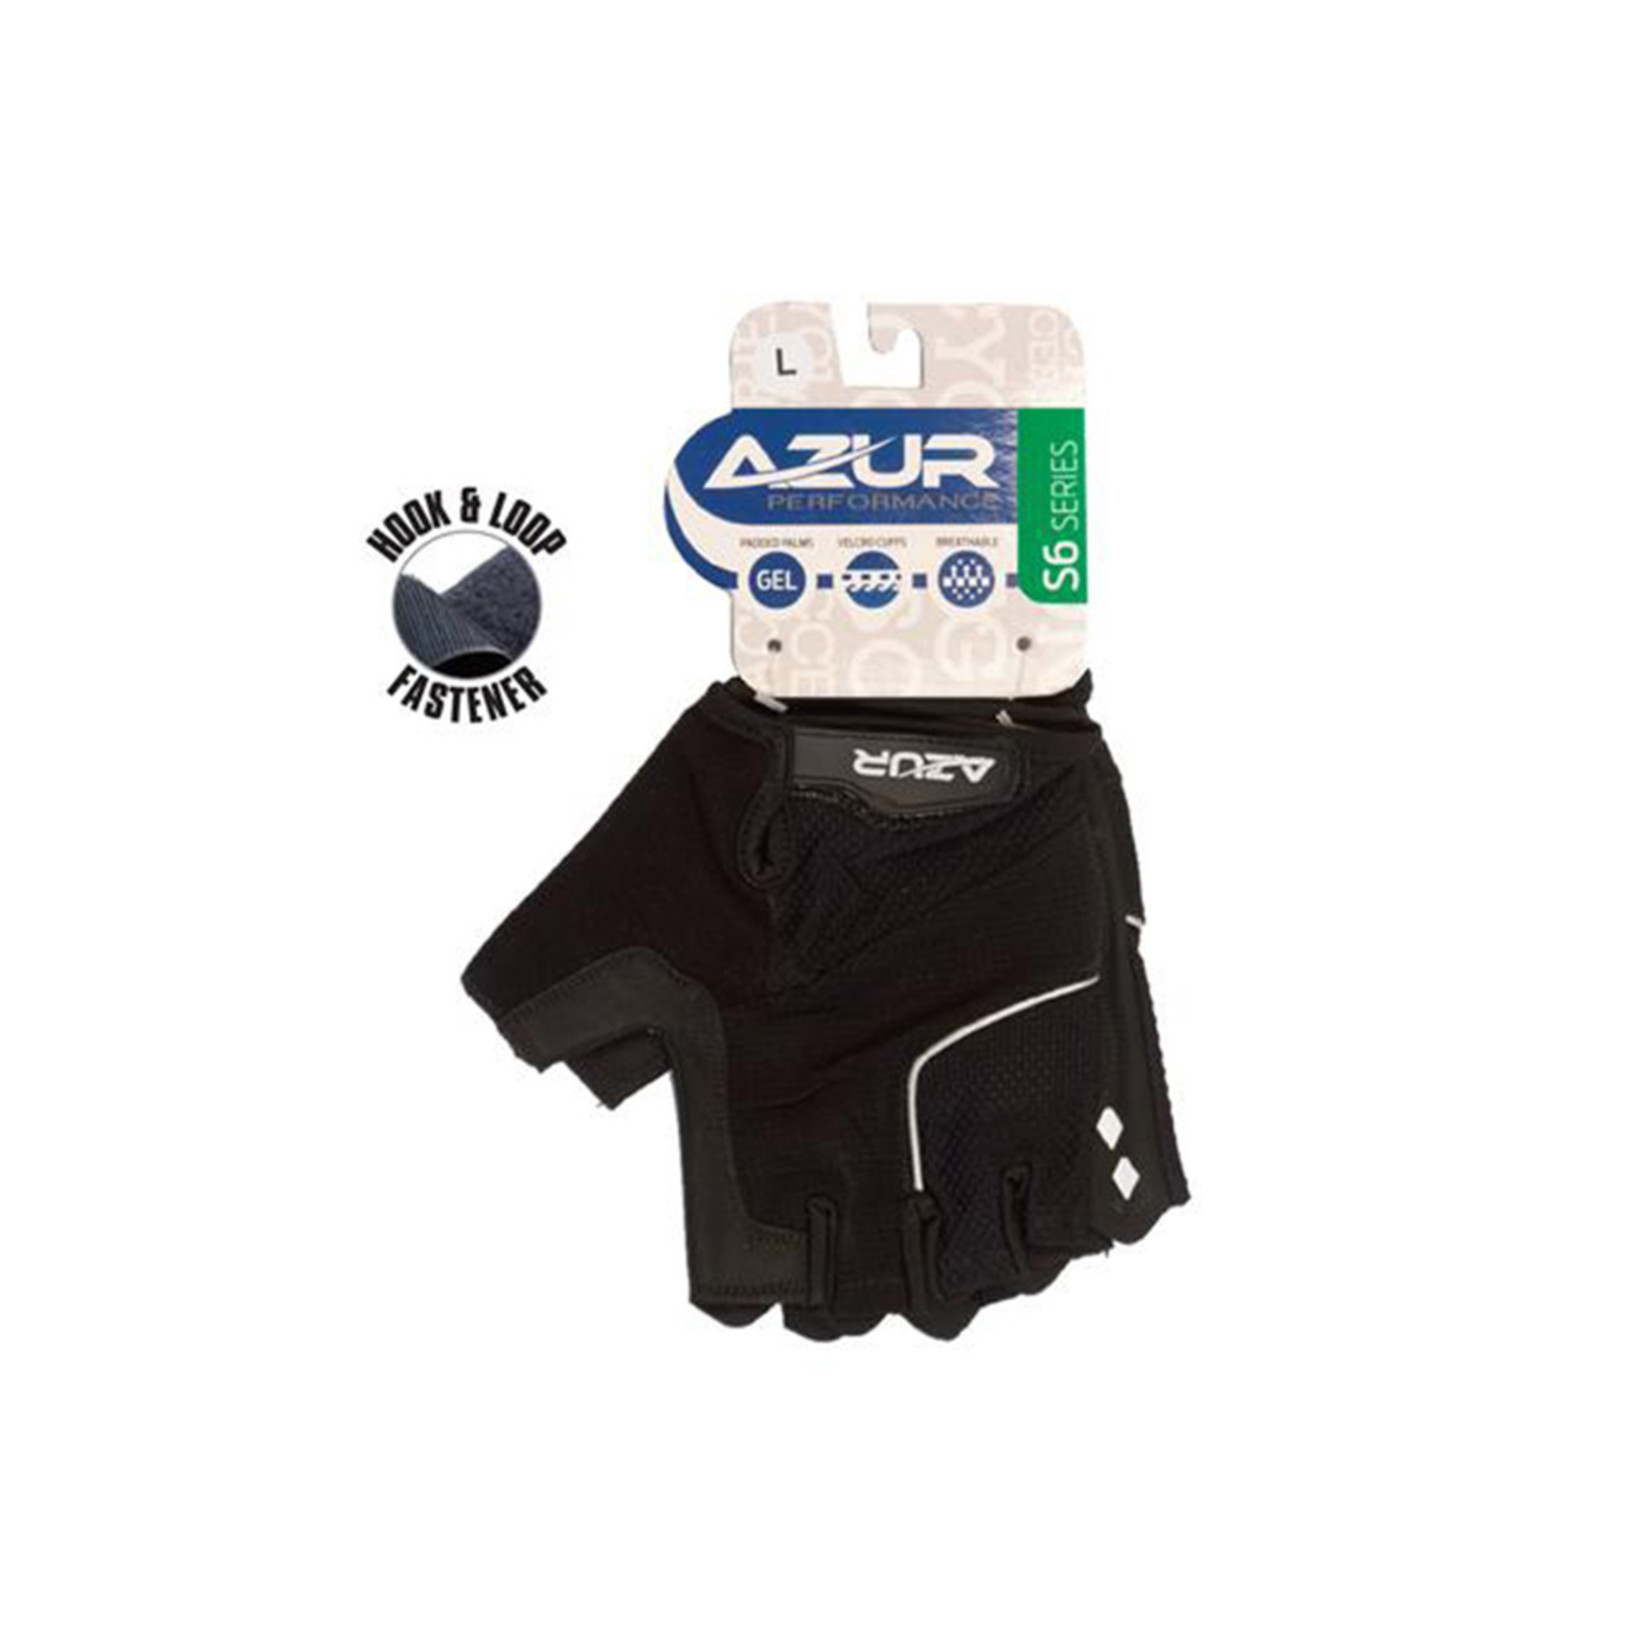 Azur Azur Bike/Cycling Glove - Synthetic Palm - S6 Series - Black - X Small